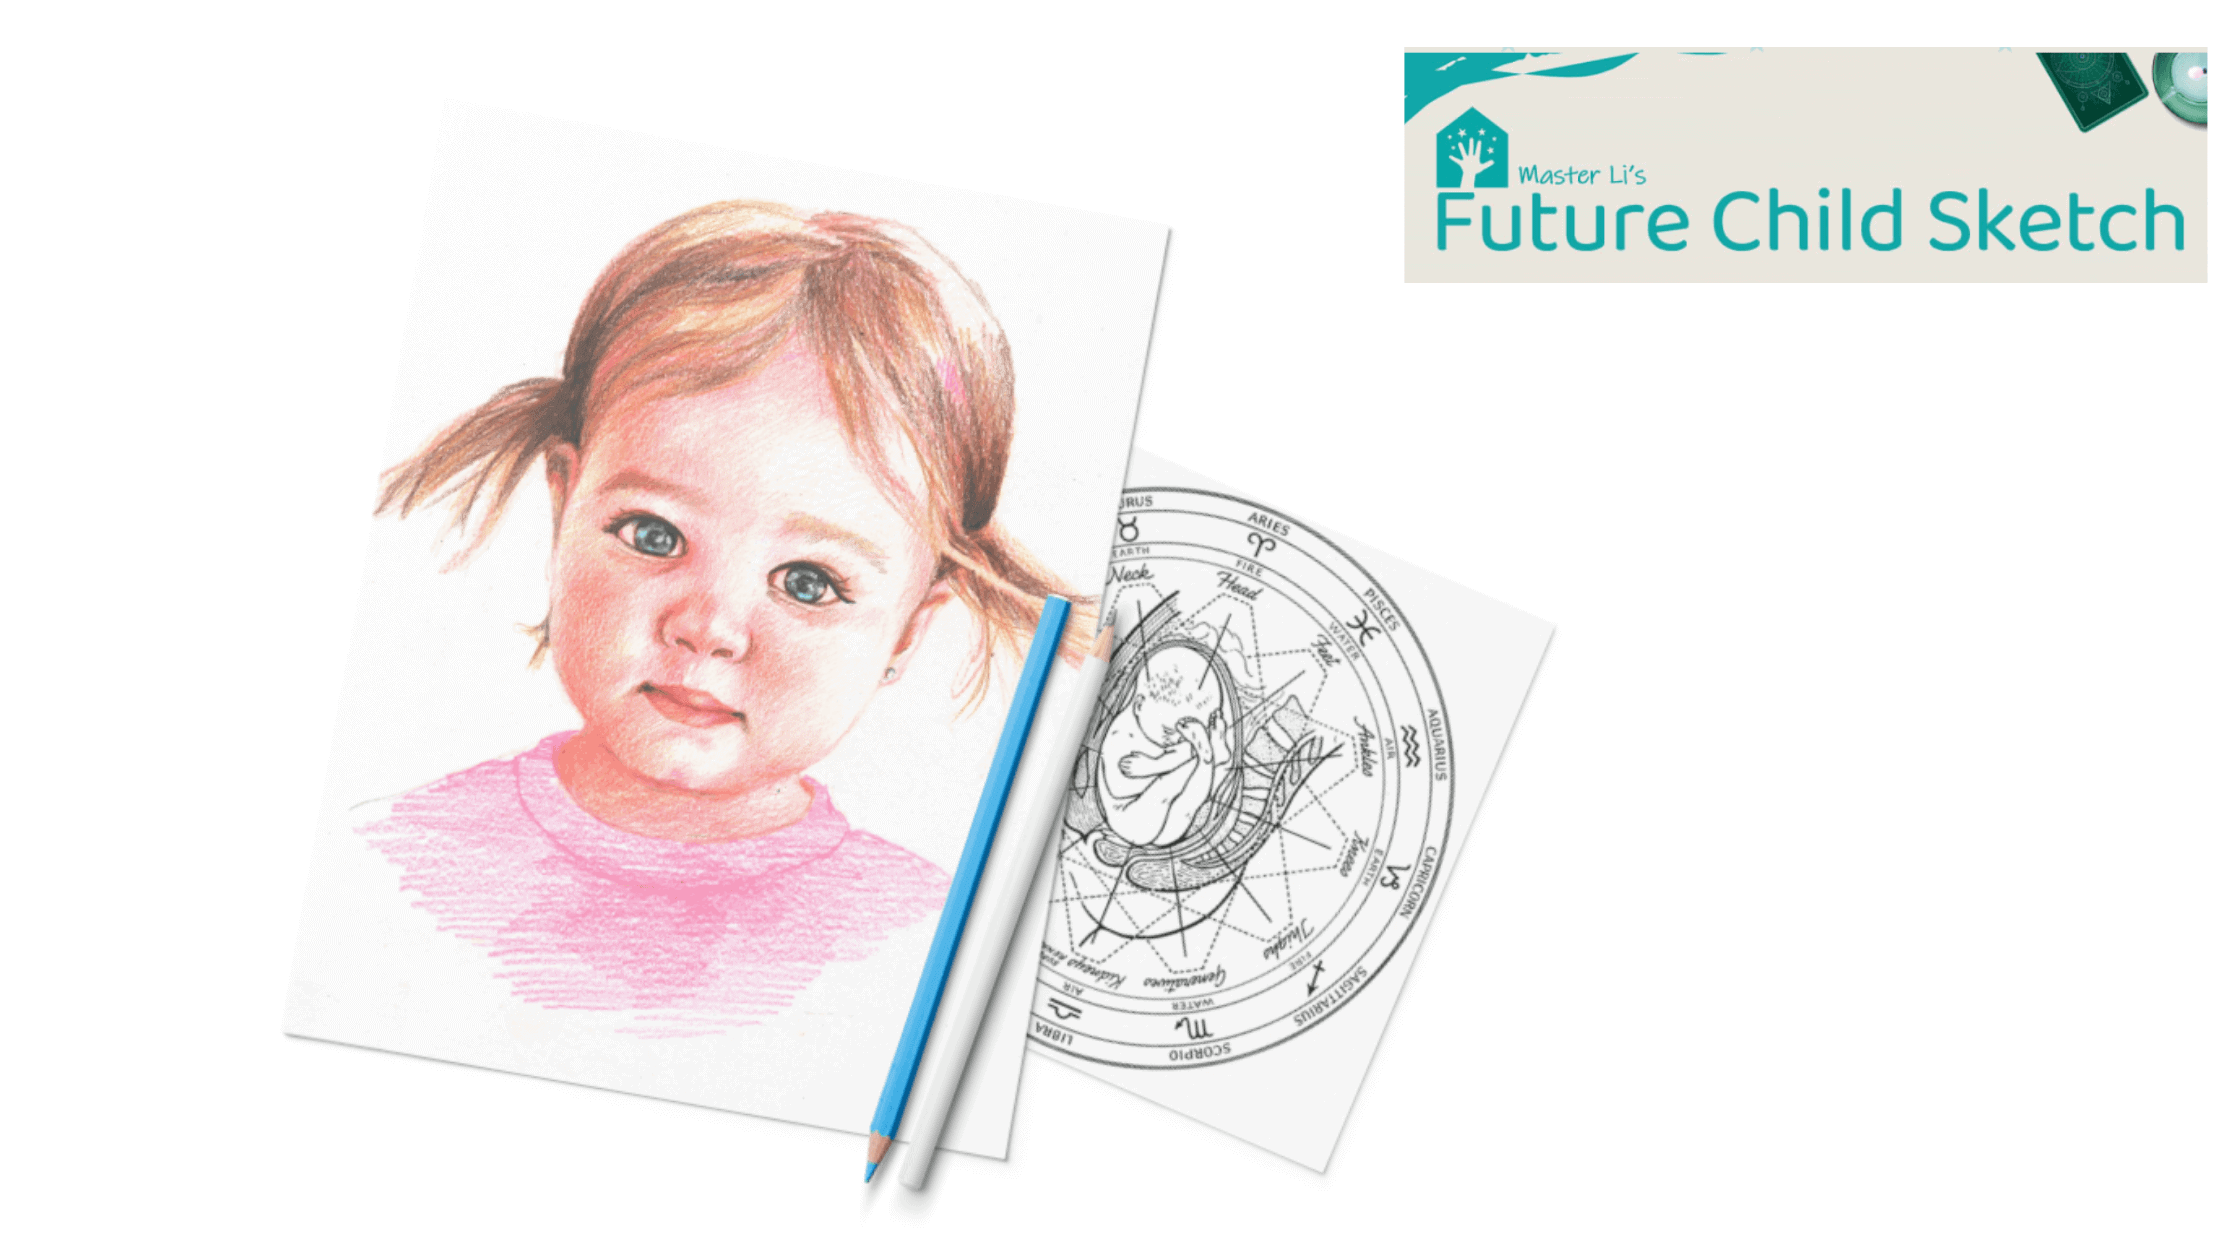 Master Li's Future Child Sketch benefits